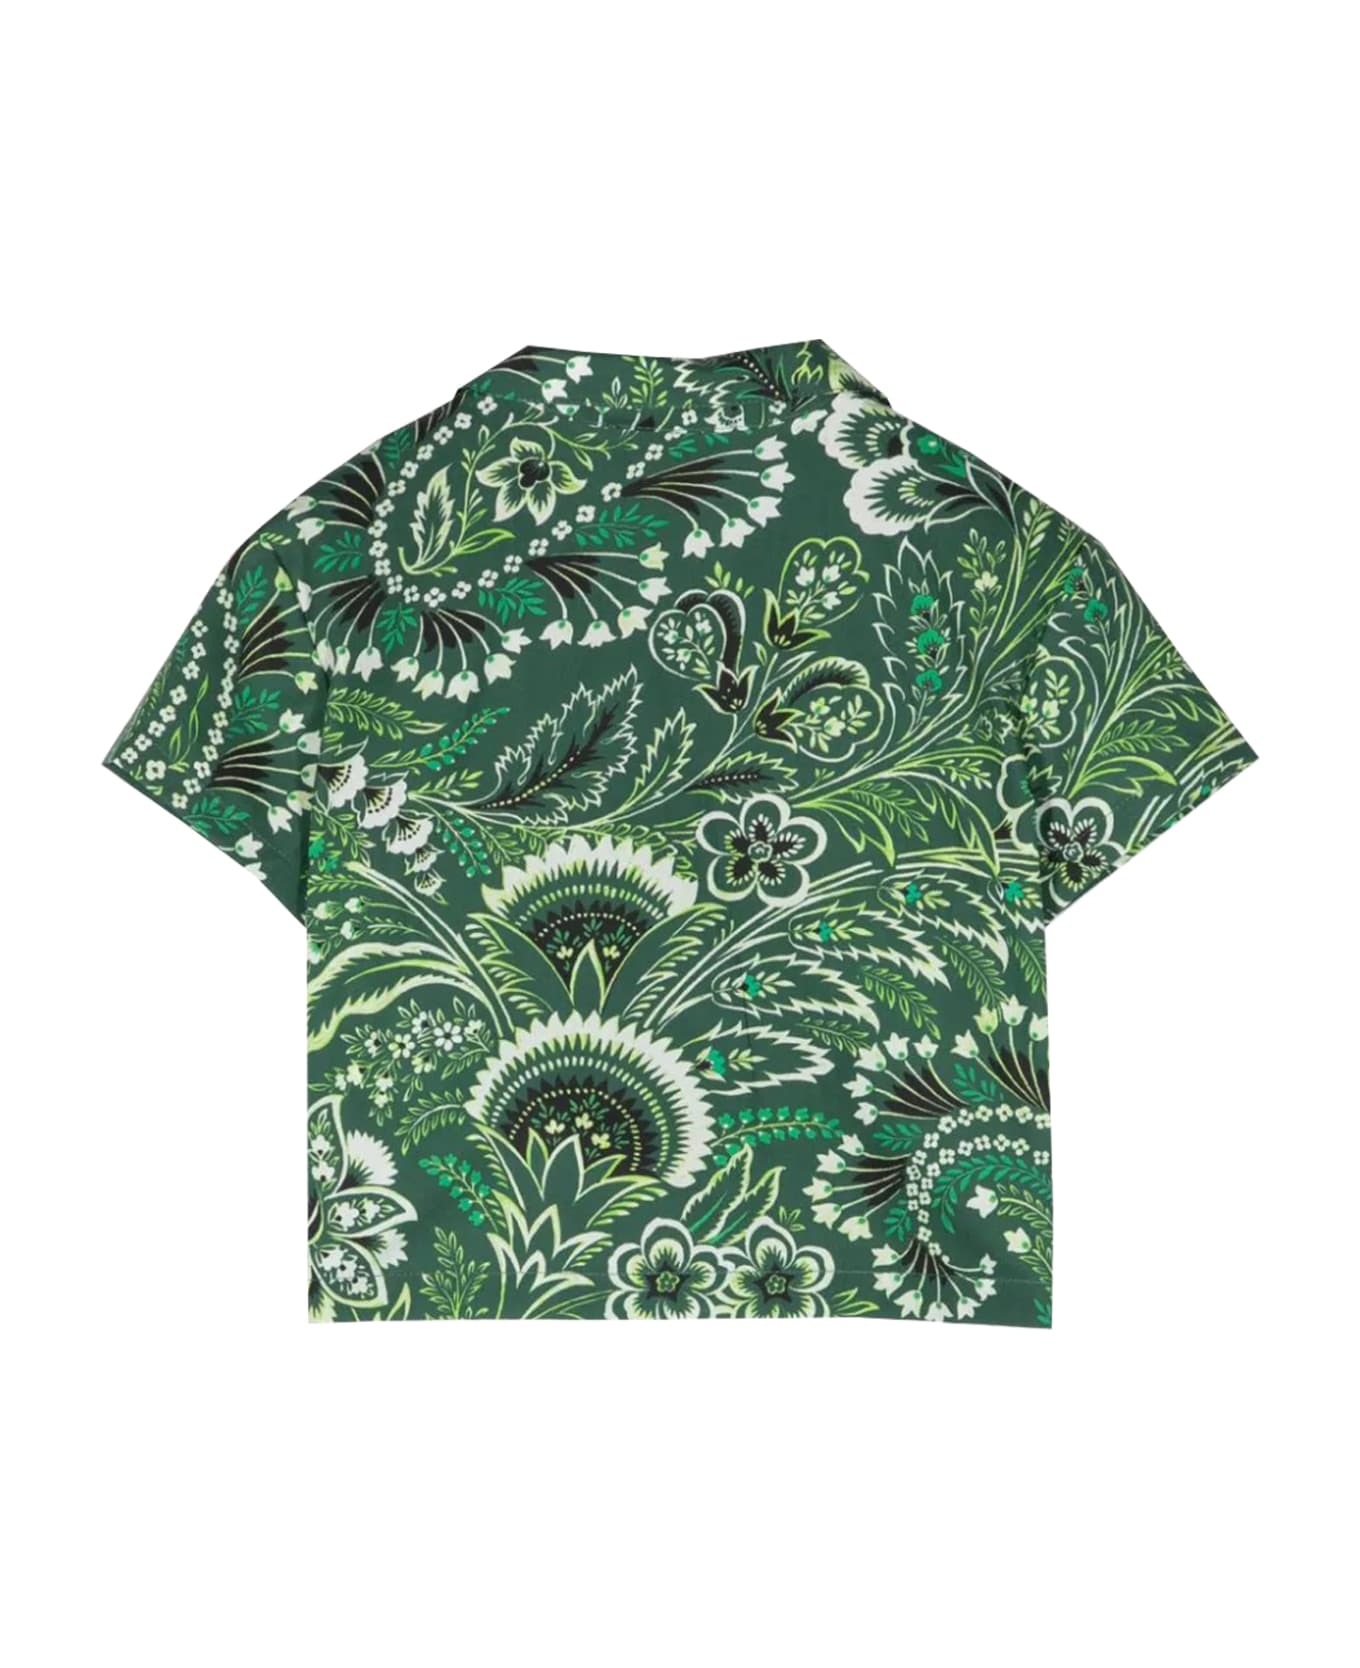 Etro Monochrome Paisley Shirt - Green